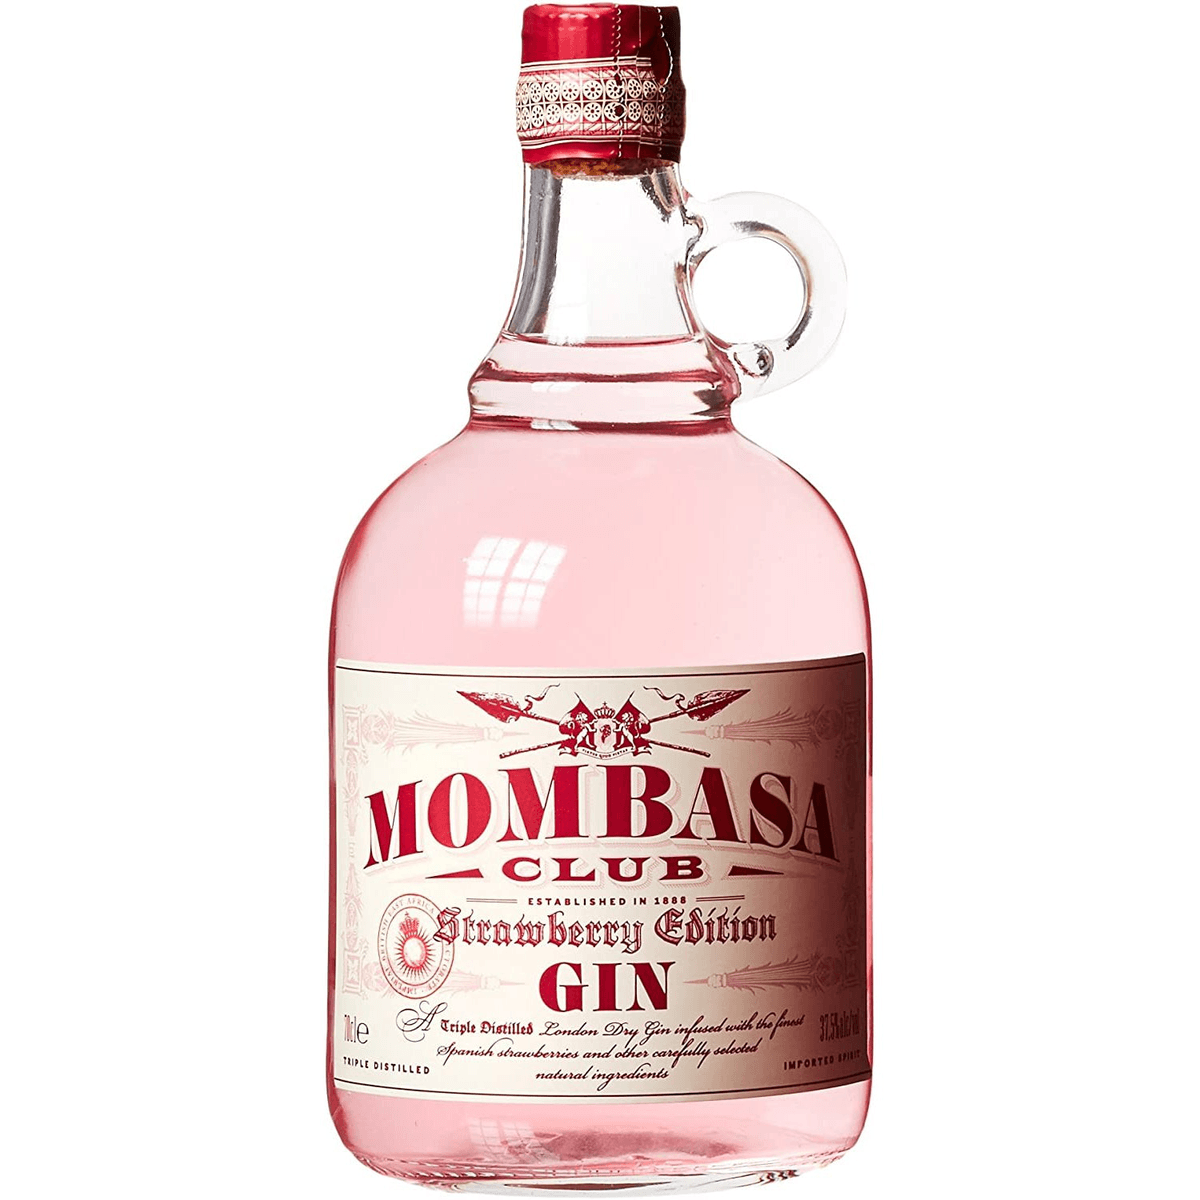 Mombasa Club Winebuyers Vol. 37,5% Edition 0,7L Gin | Strawberry